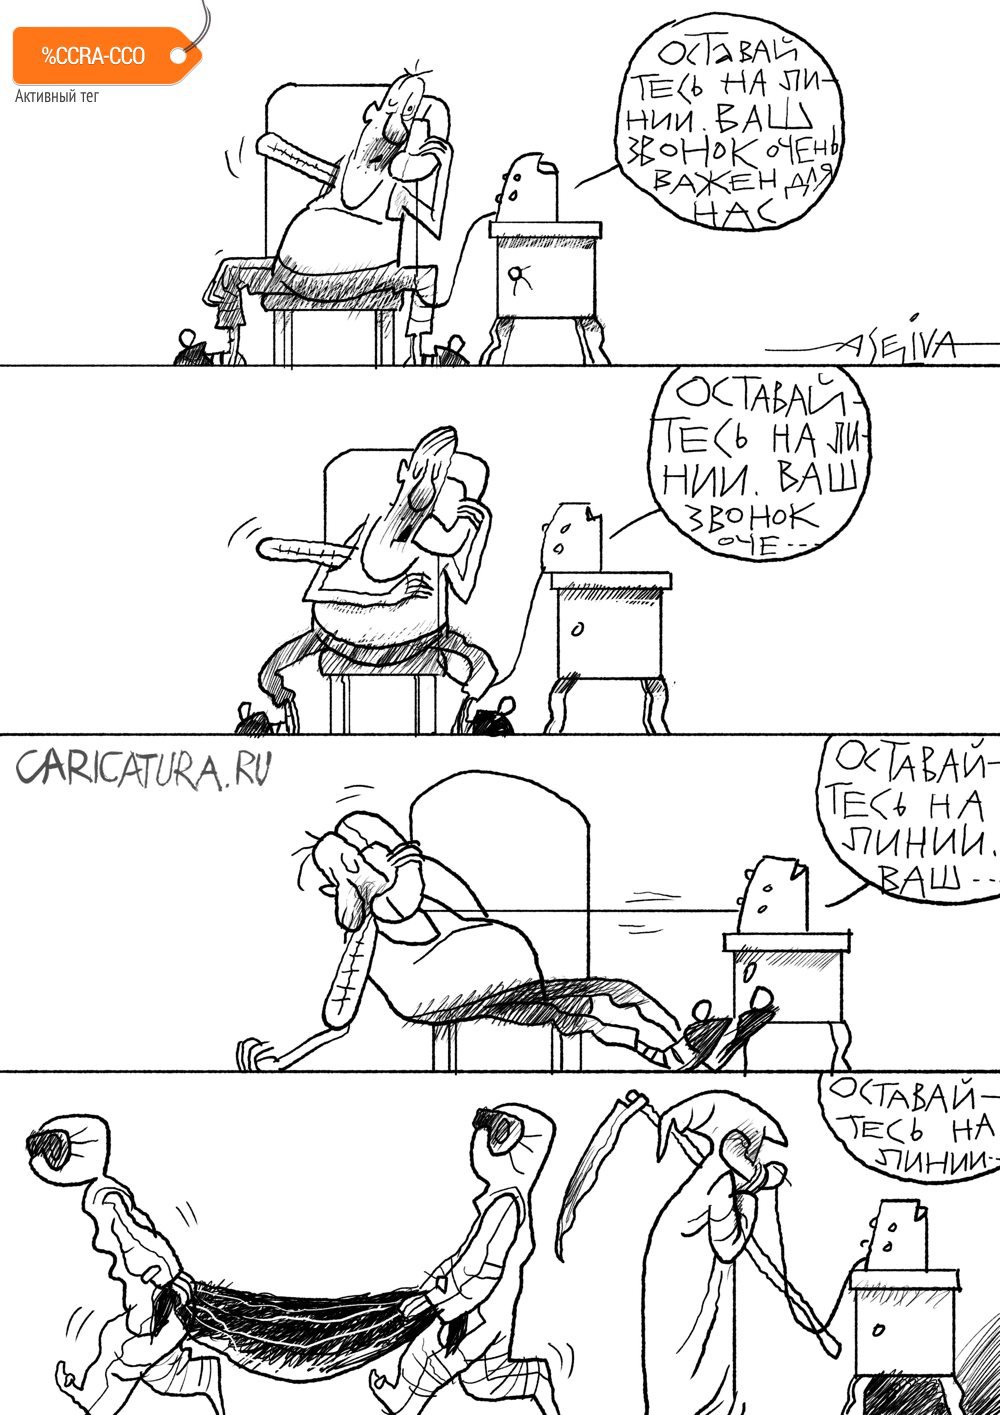 Комикс "Оставайтесь на линии!", Андрей Селиванов